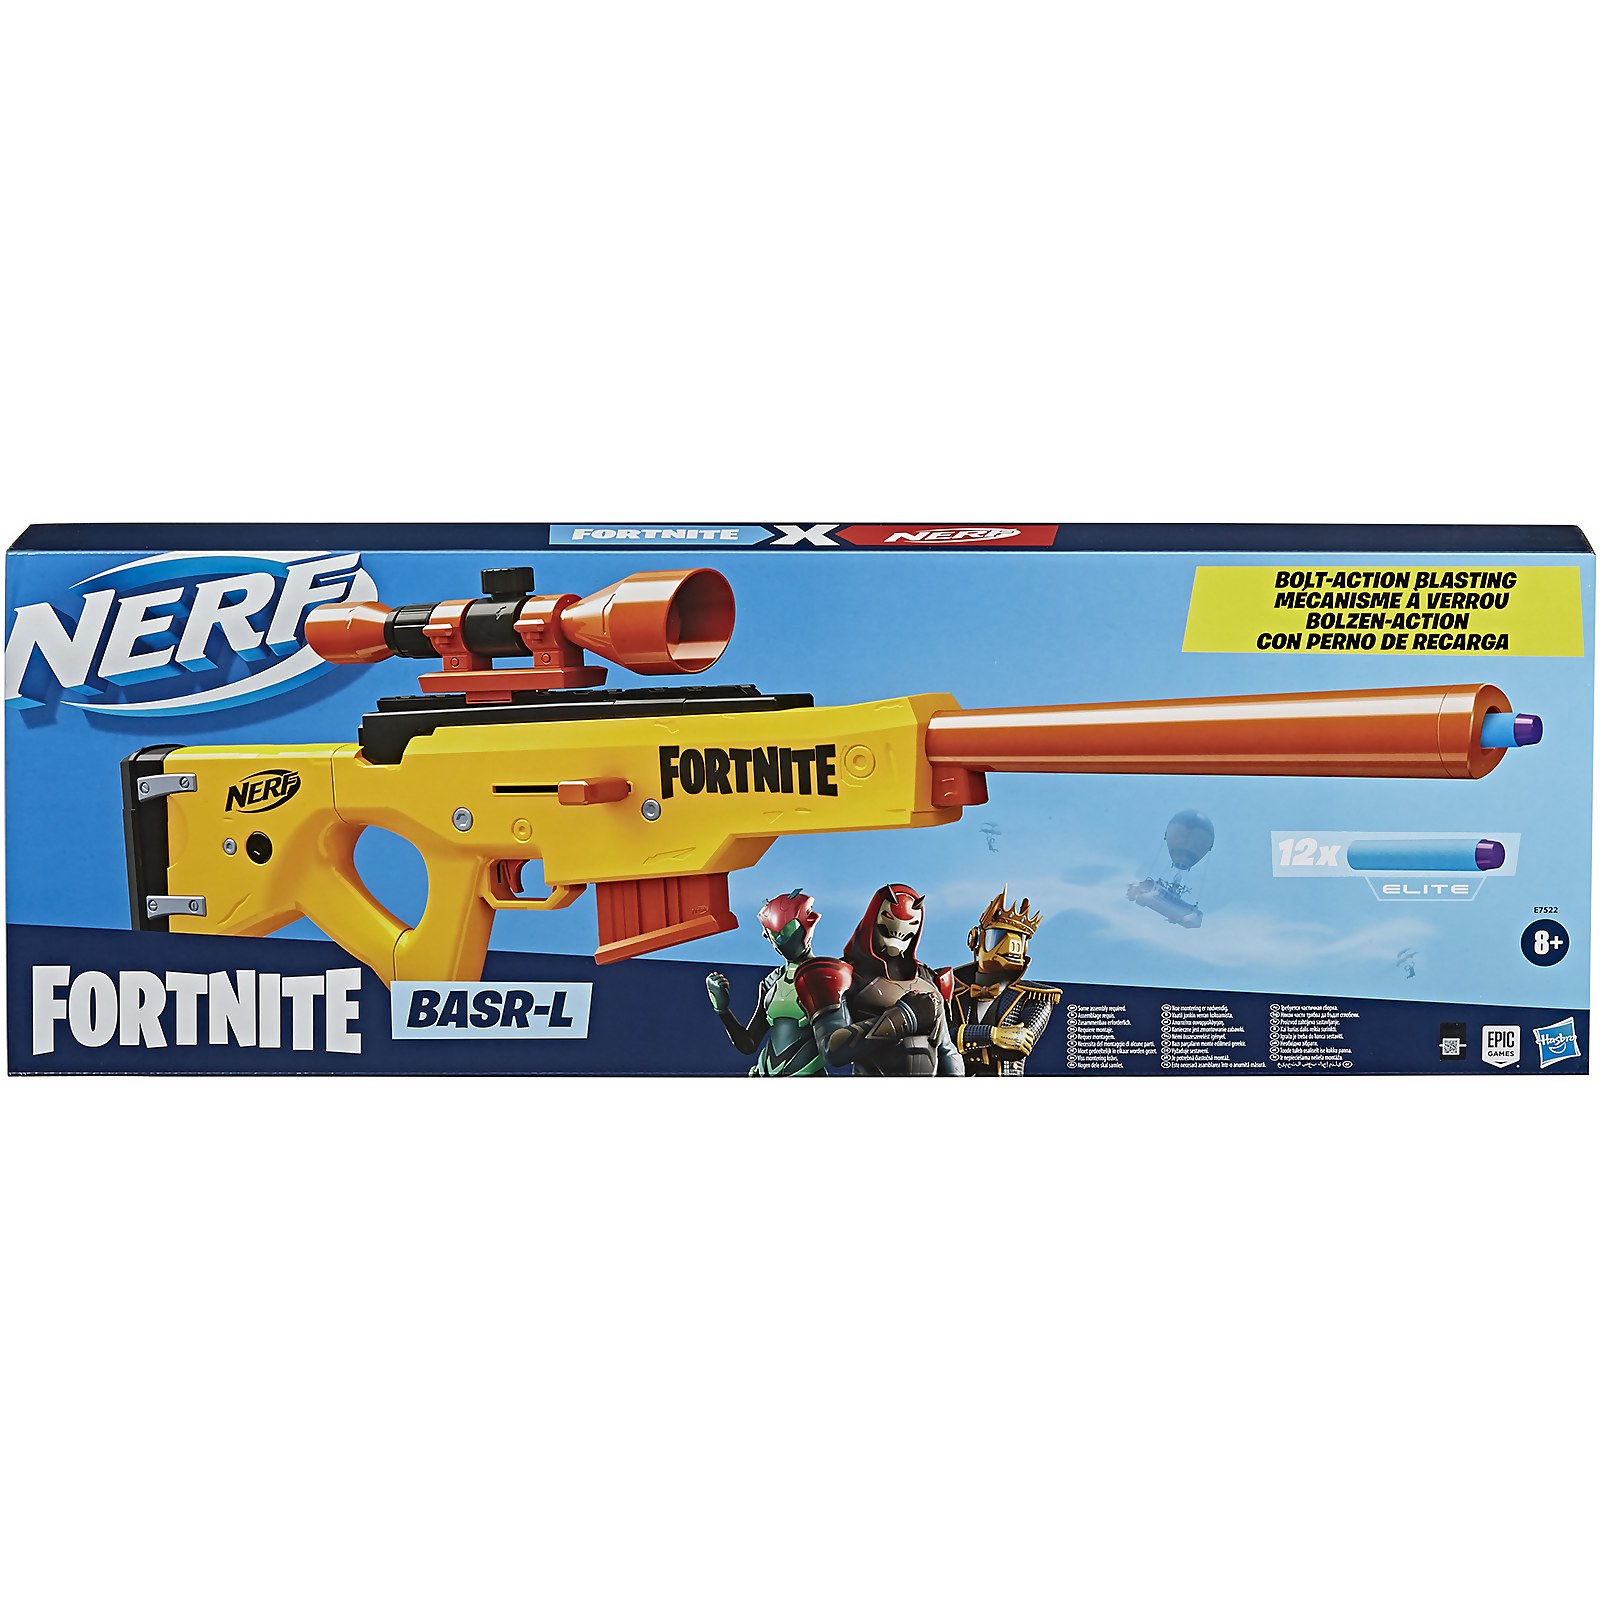 Nerf Fortnite BASR L Blaster